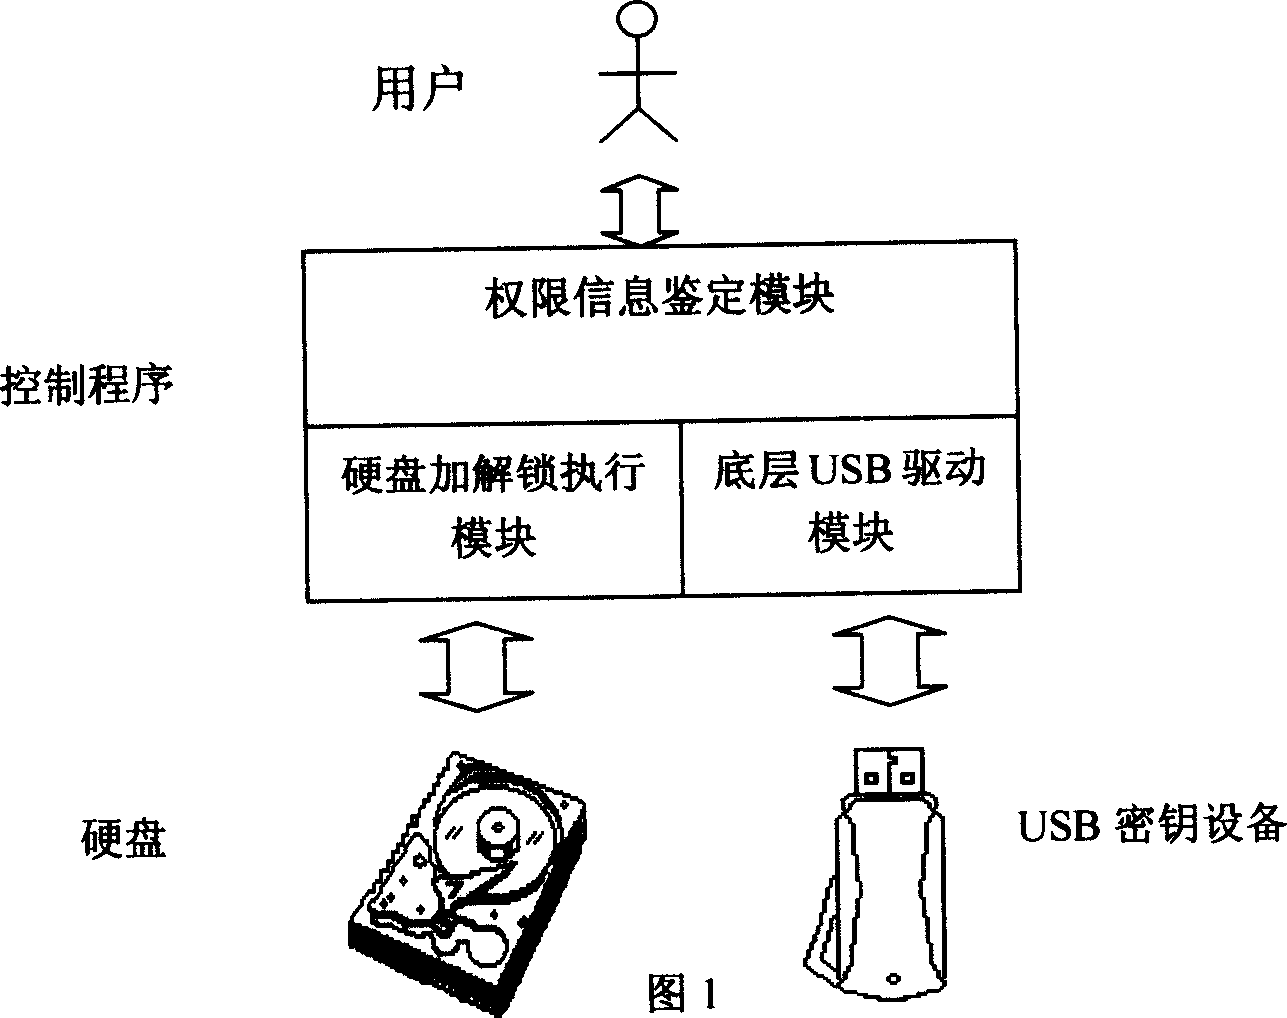 Hand disk locking and de-locking control scheme based on USB key apparatus